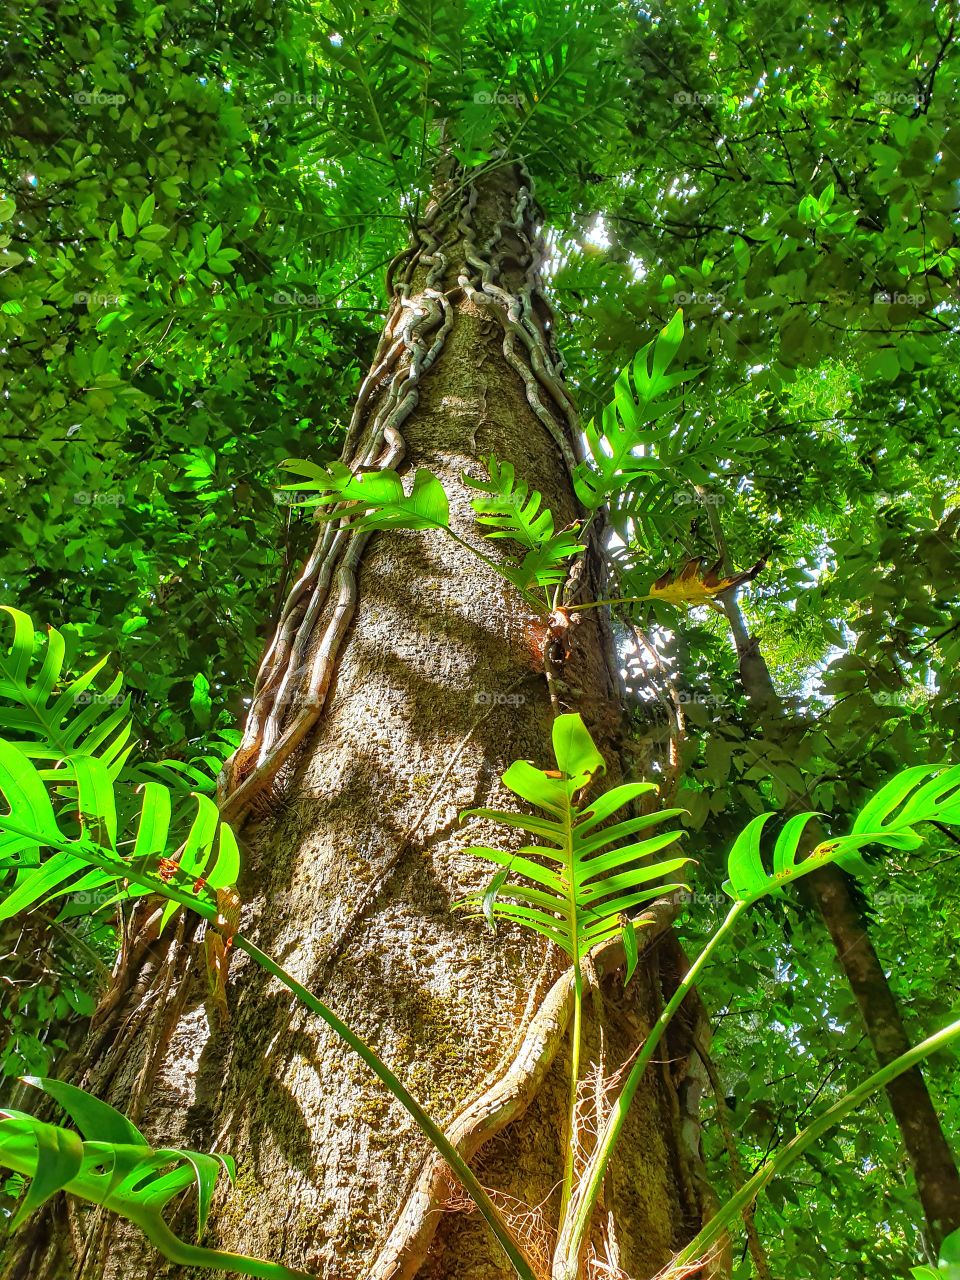 Rainforest giants